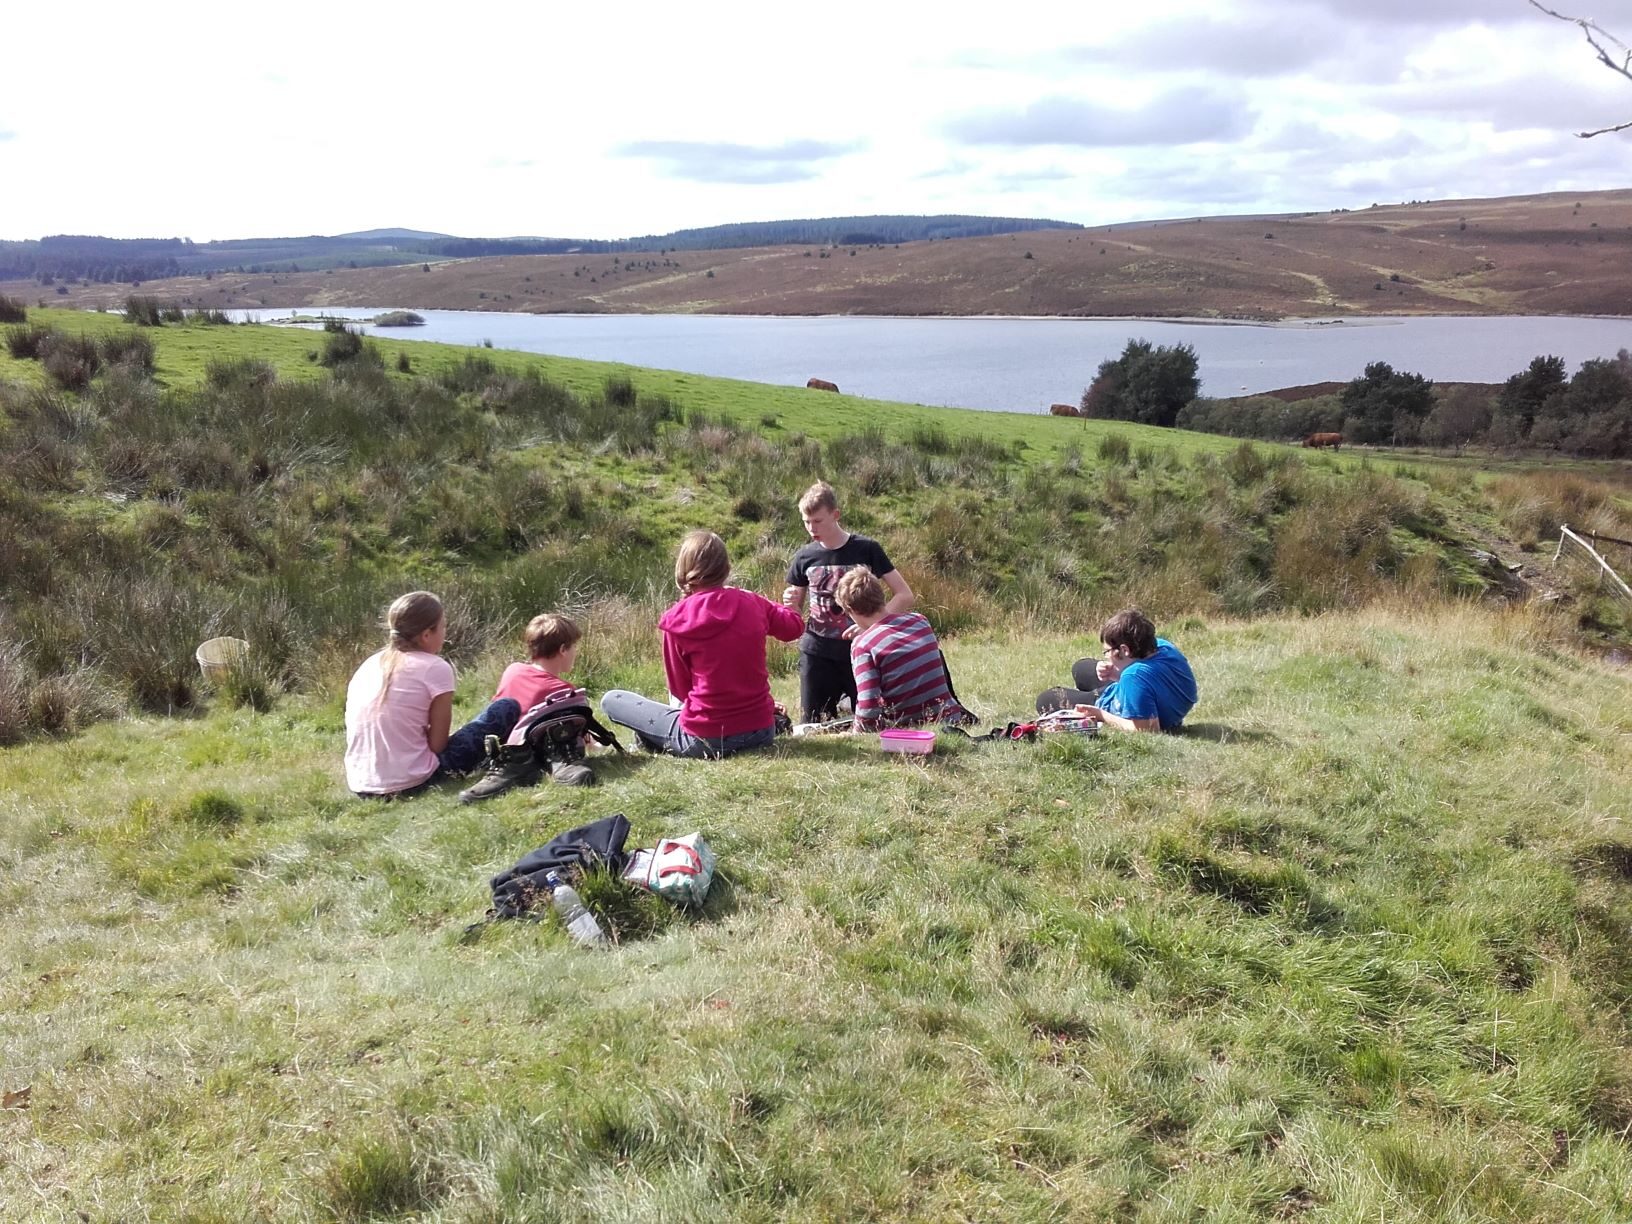 Ceidwaid Ifanc yn cael picnic / Young Rangers having a picnic